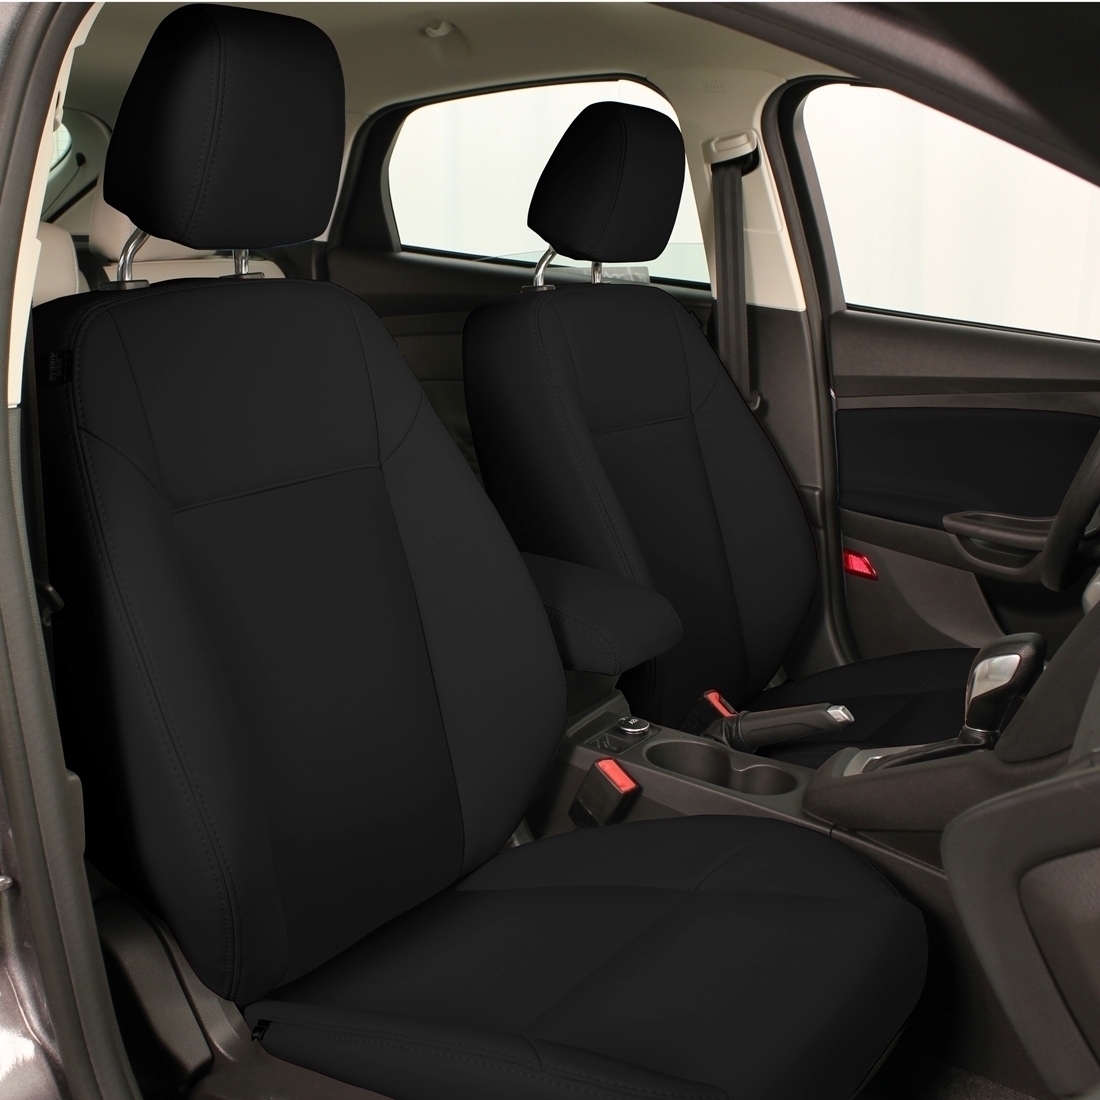 Ford Focus Seat Covers | Leather Seats | Interiors | Katzkin